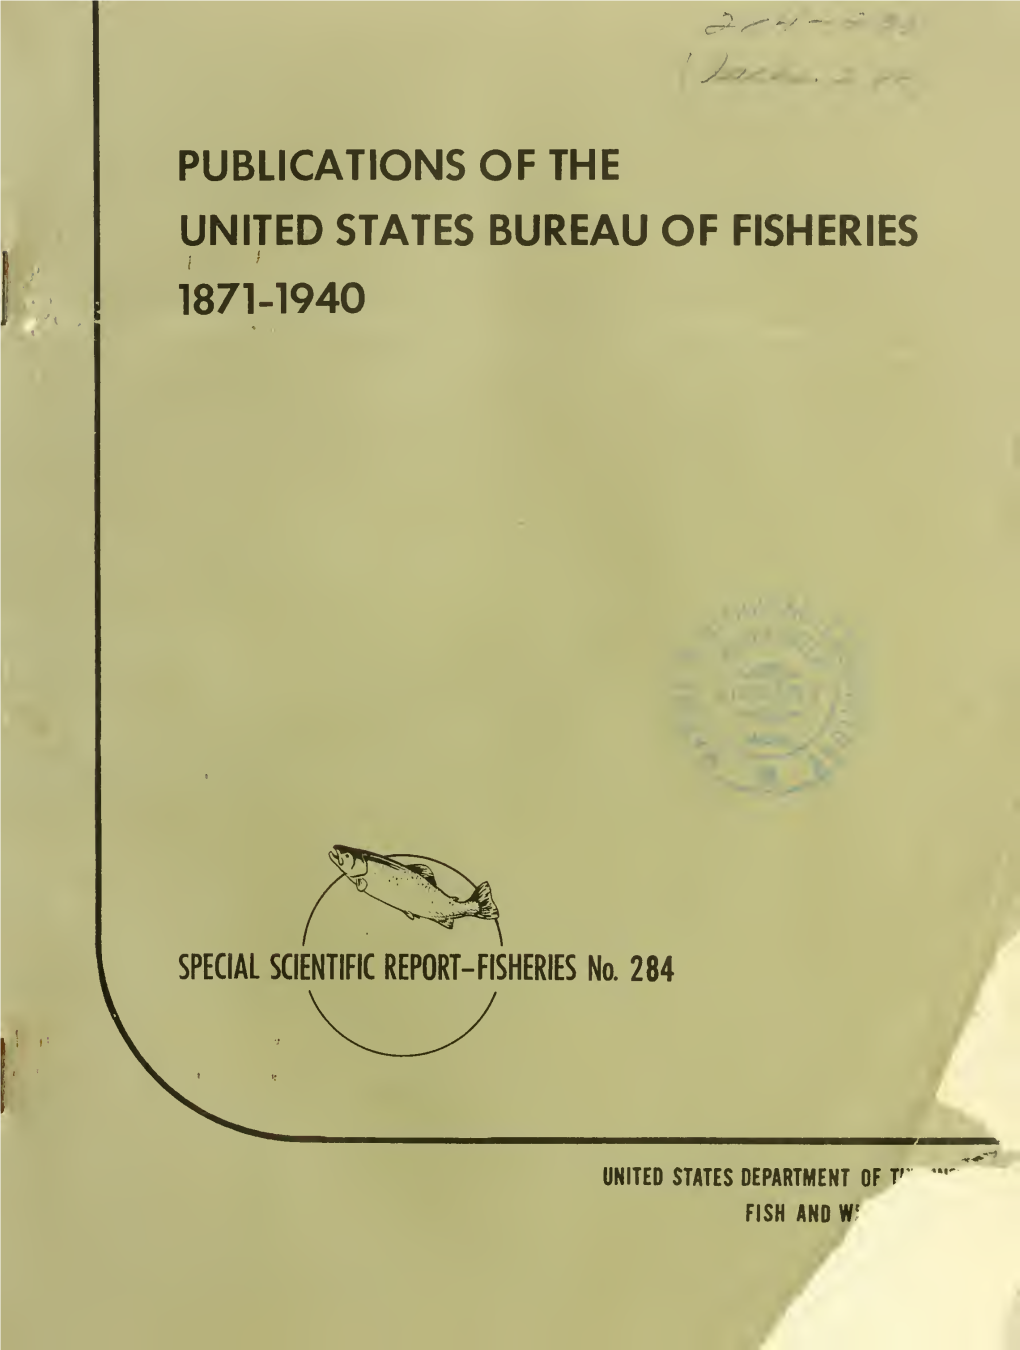 SPECIAL SCIENTIFIC REPORT- FISHERIES No